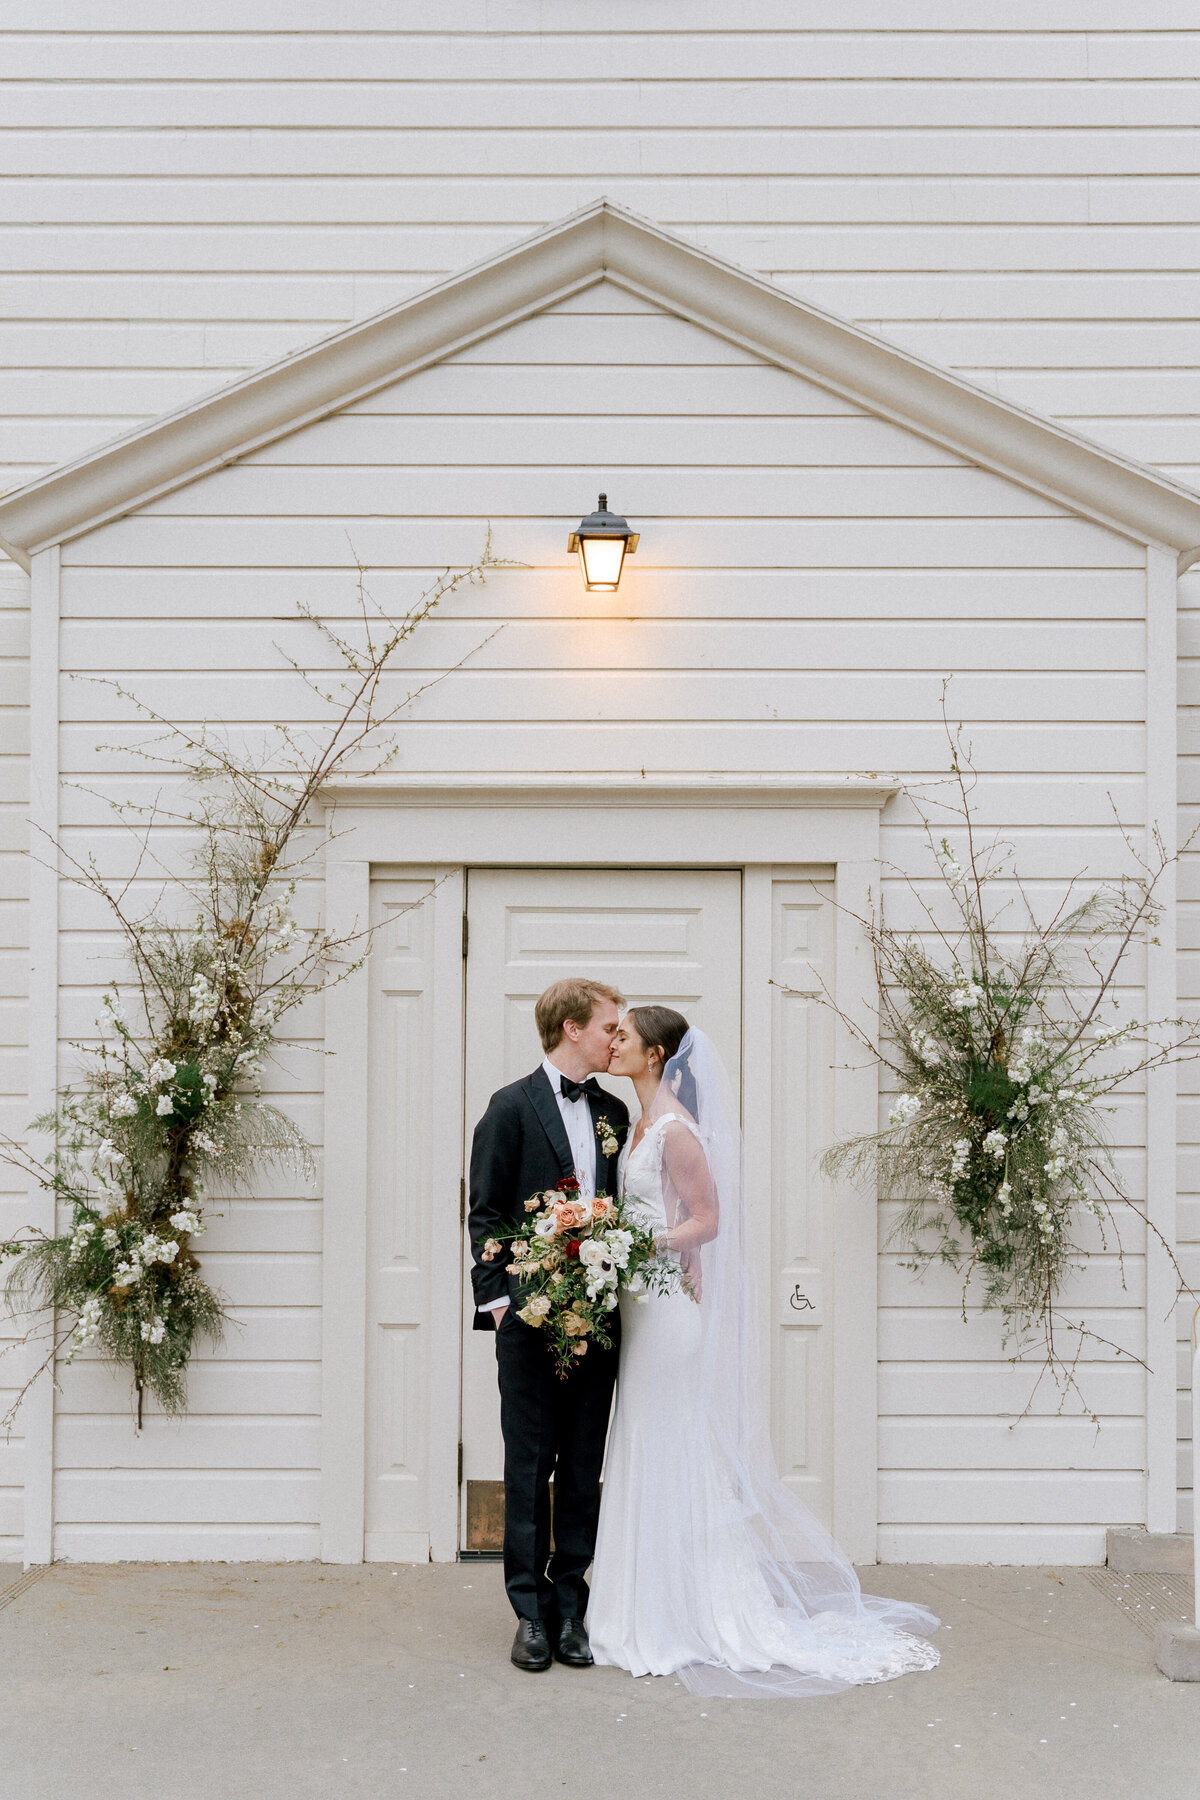 JESSICA RIEKE PHOTOGRAPHY - KRISTEN AND SAM WEDDING-571-2